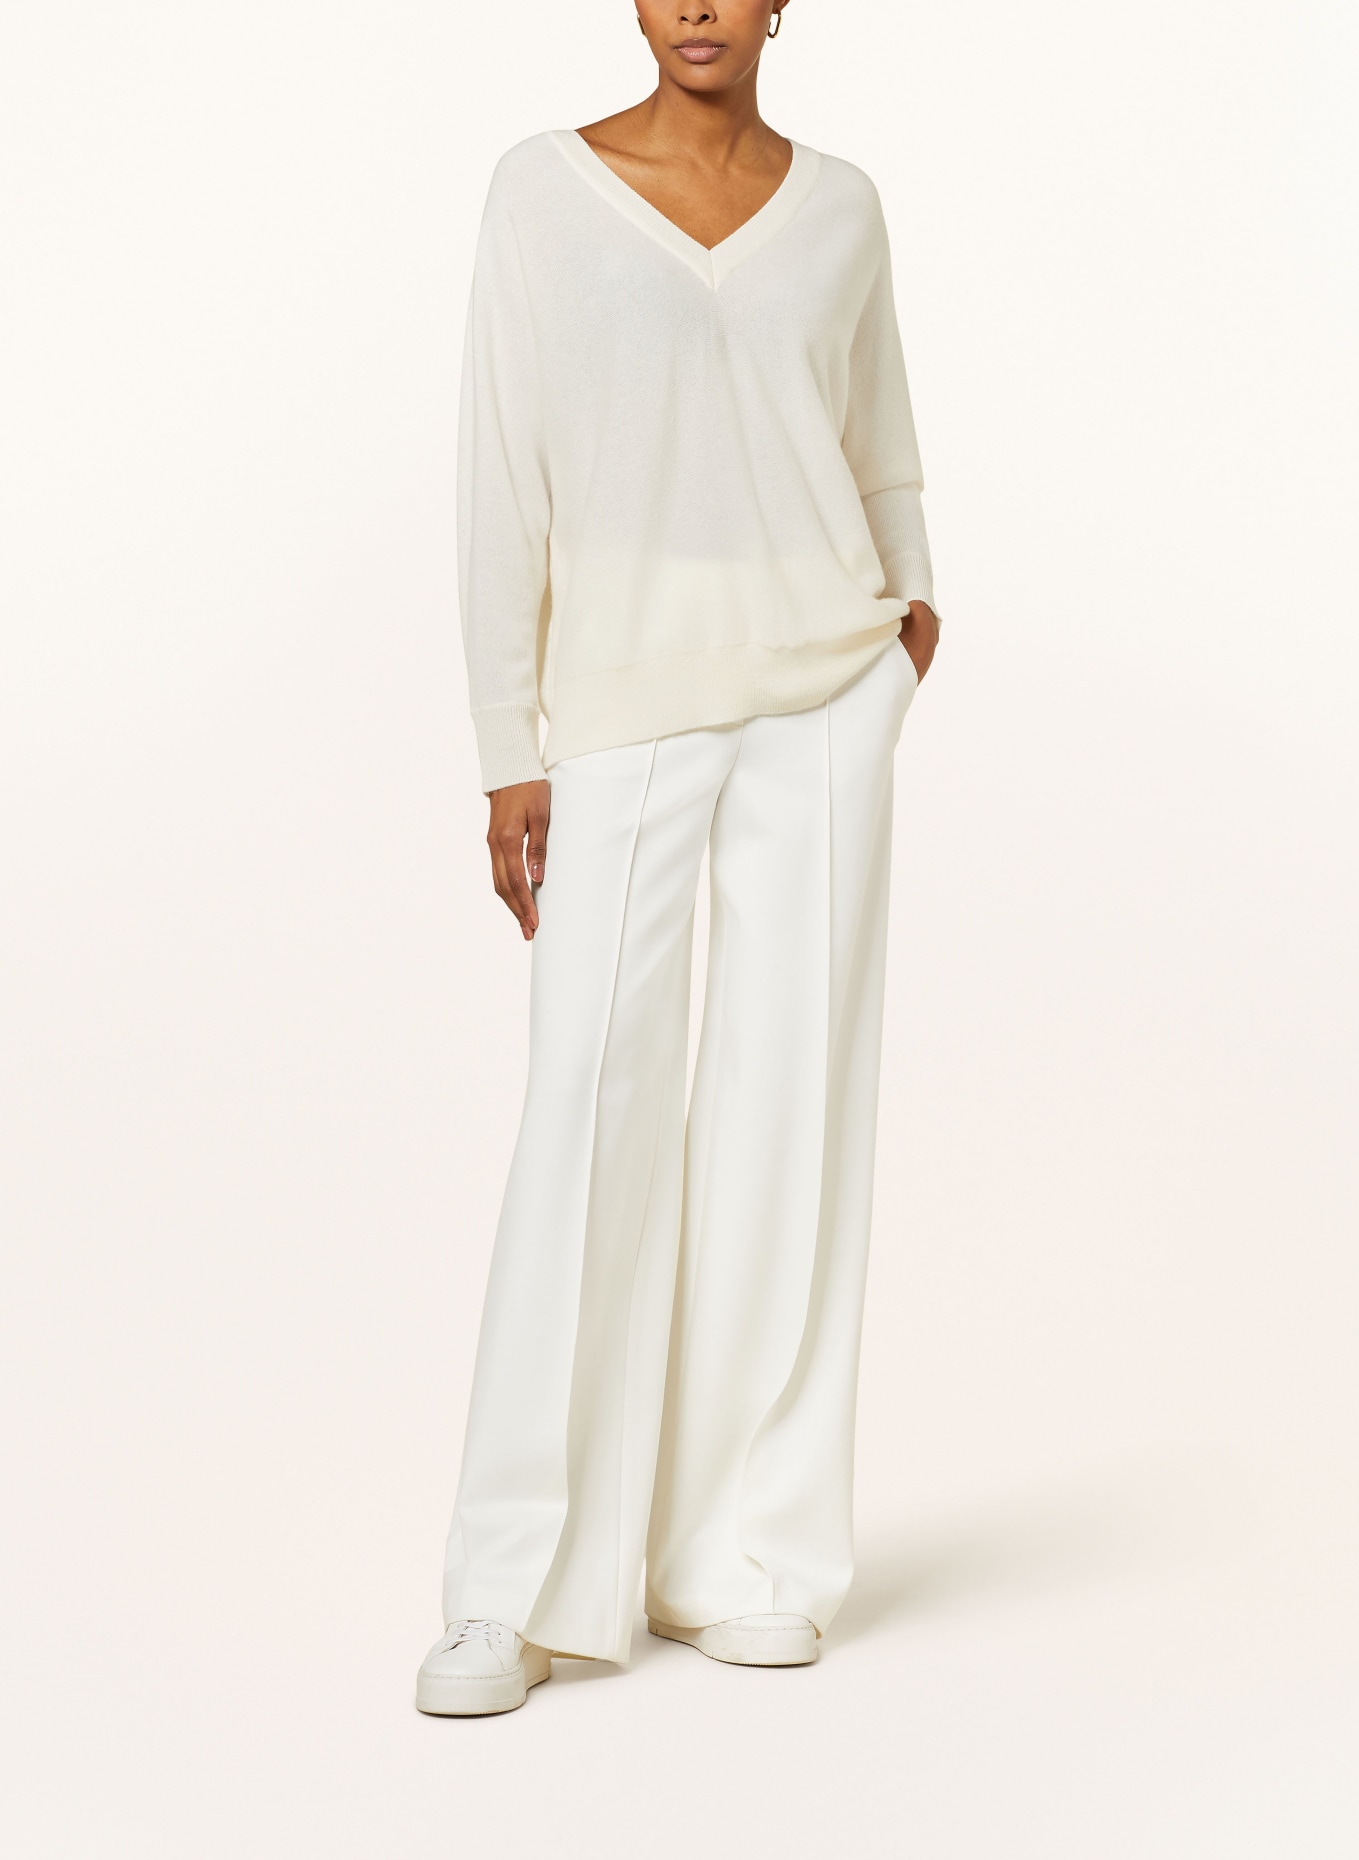 KUJTEN Cashmere-Pullover, Farbe: ECRU (Bild 2)